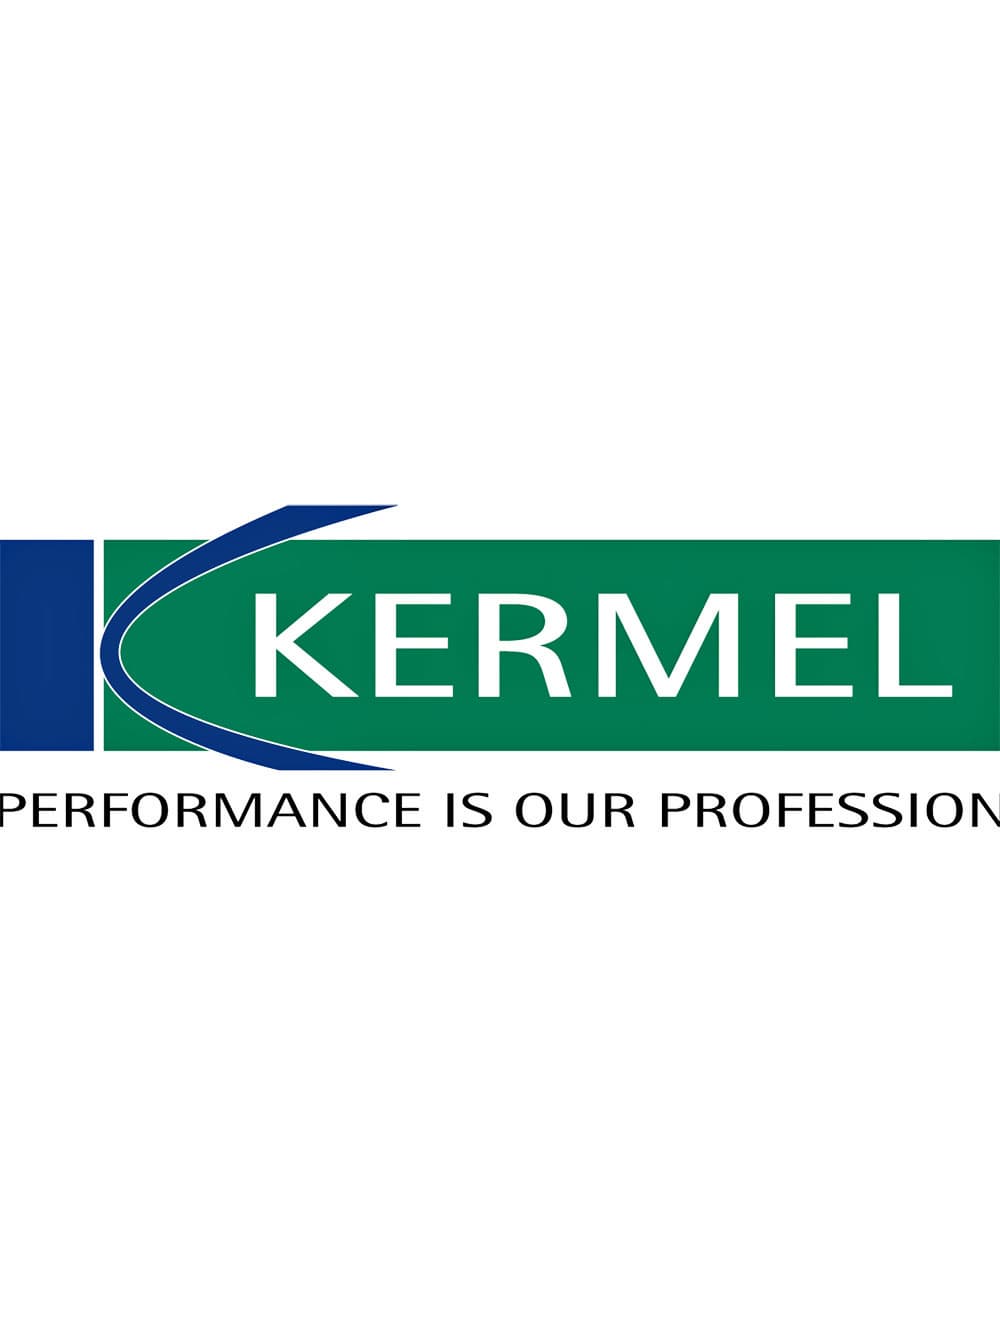 Kermel Aramid Solutions